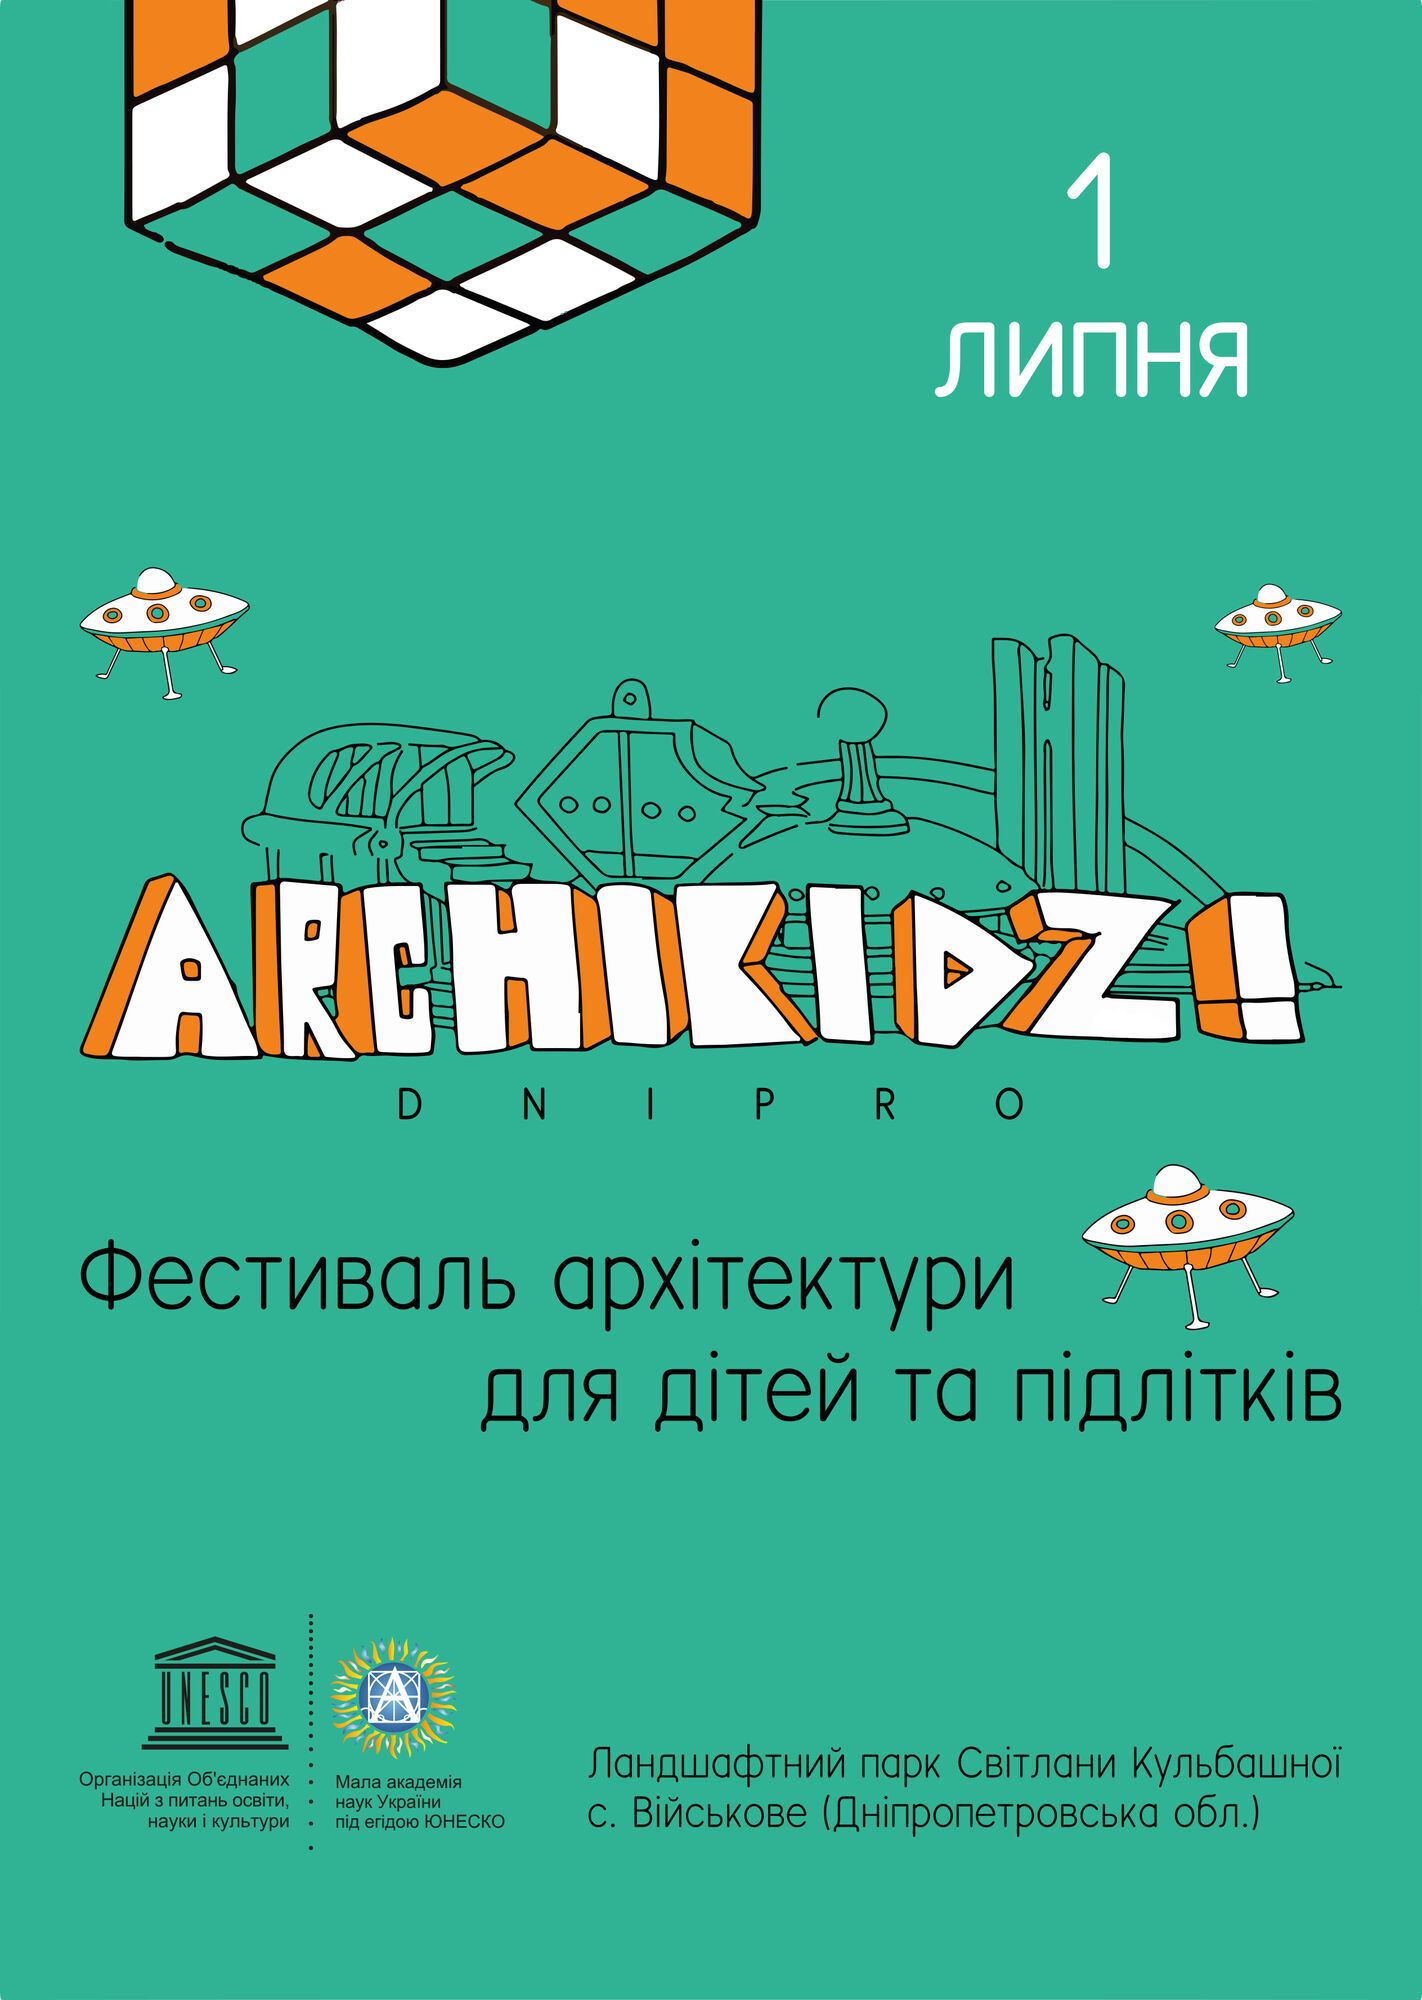 Archikidz! в Днепре: программа фестиваля 